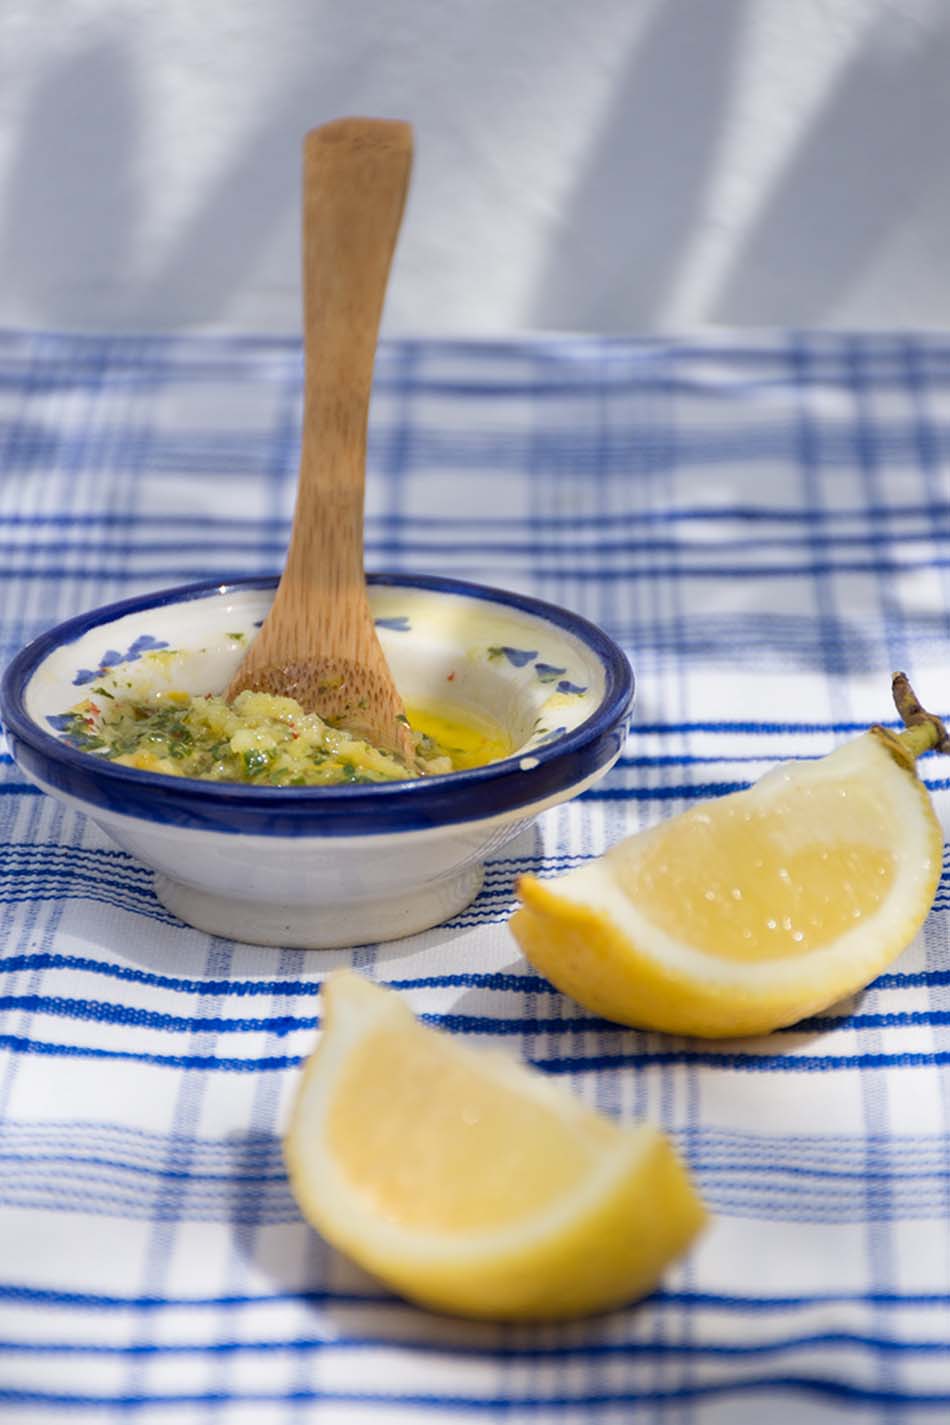 Grilled Sardines with Lemon - Mint Sauce